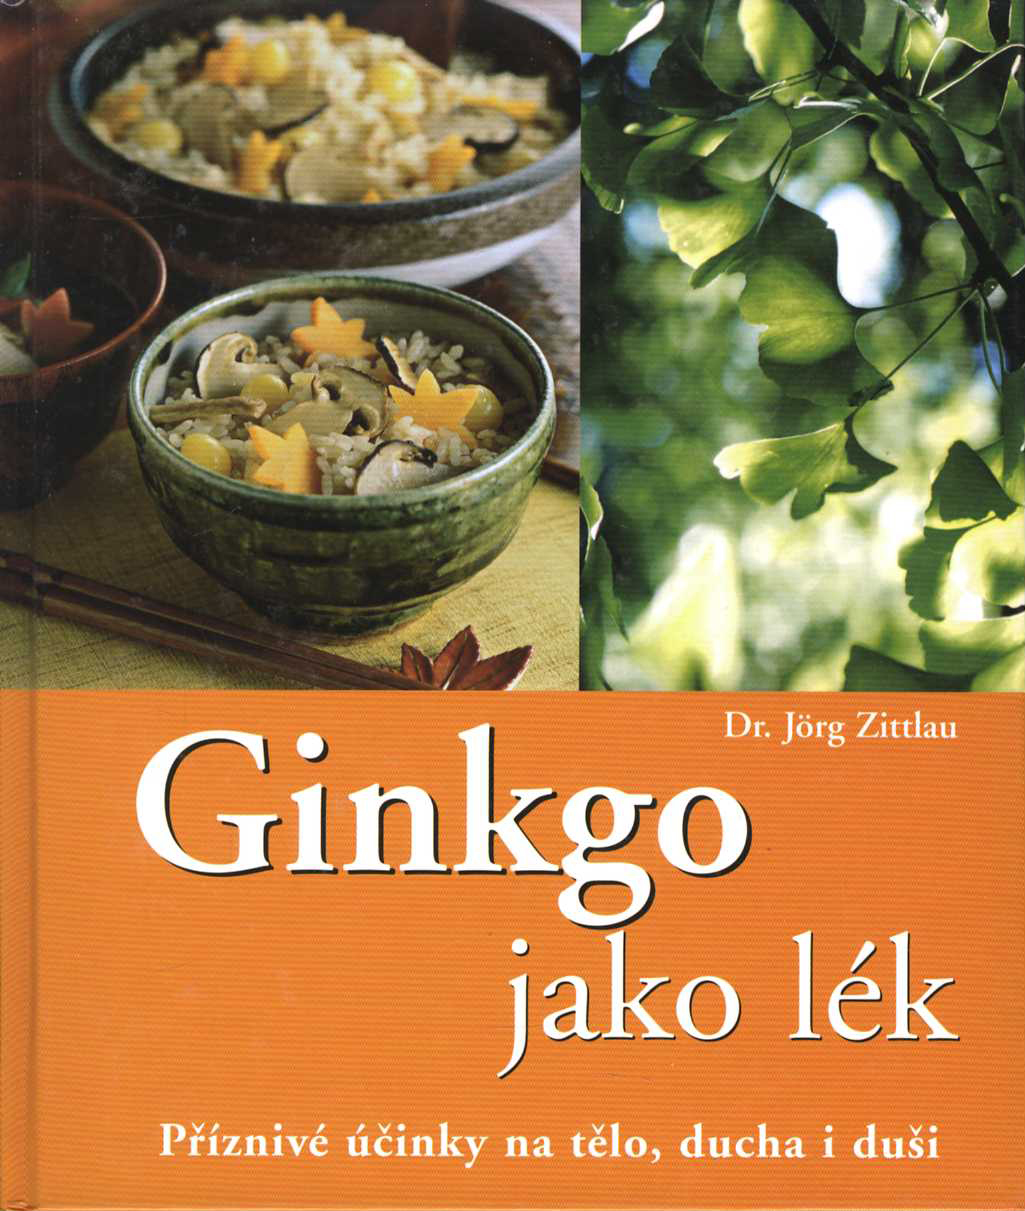 Ginkgo jako lék (Jörg Zittlau)